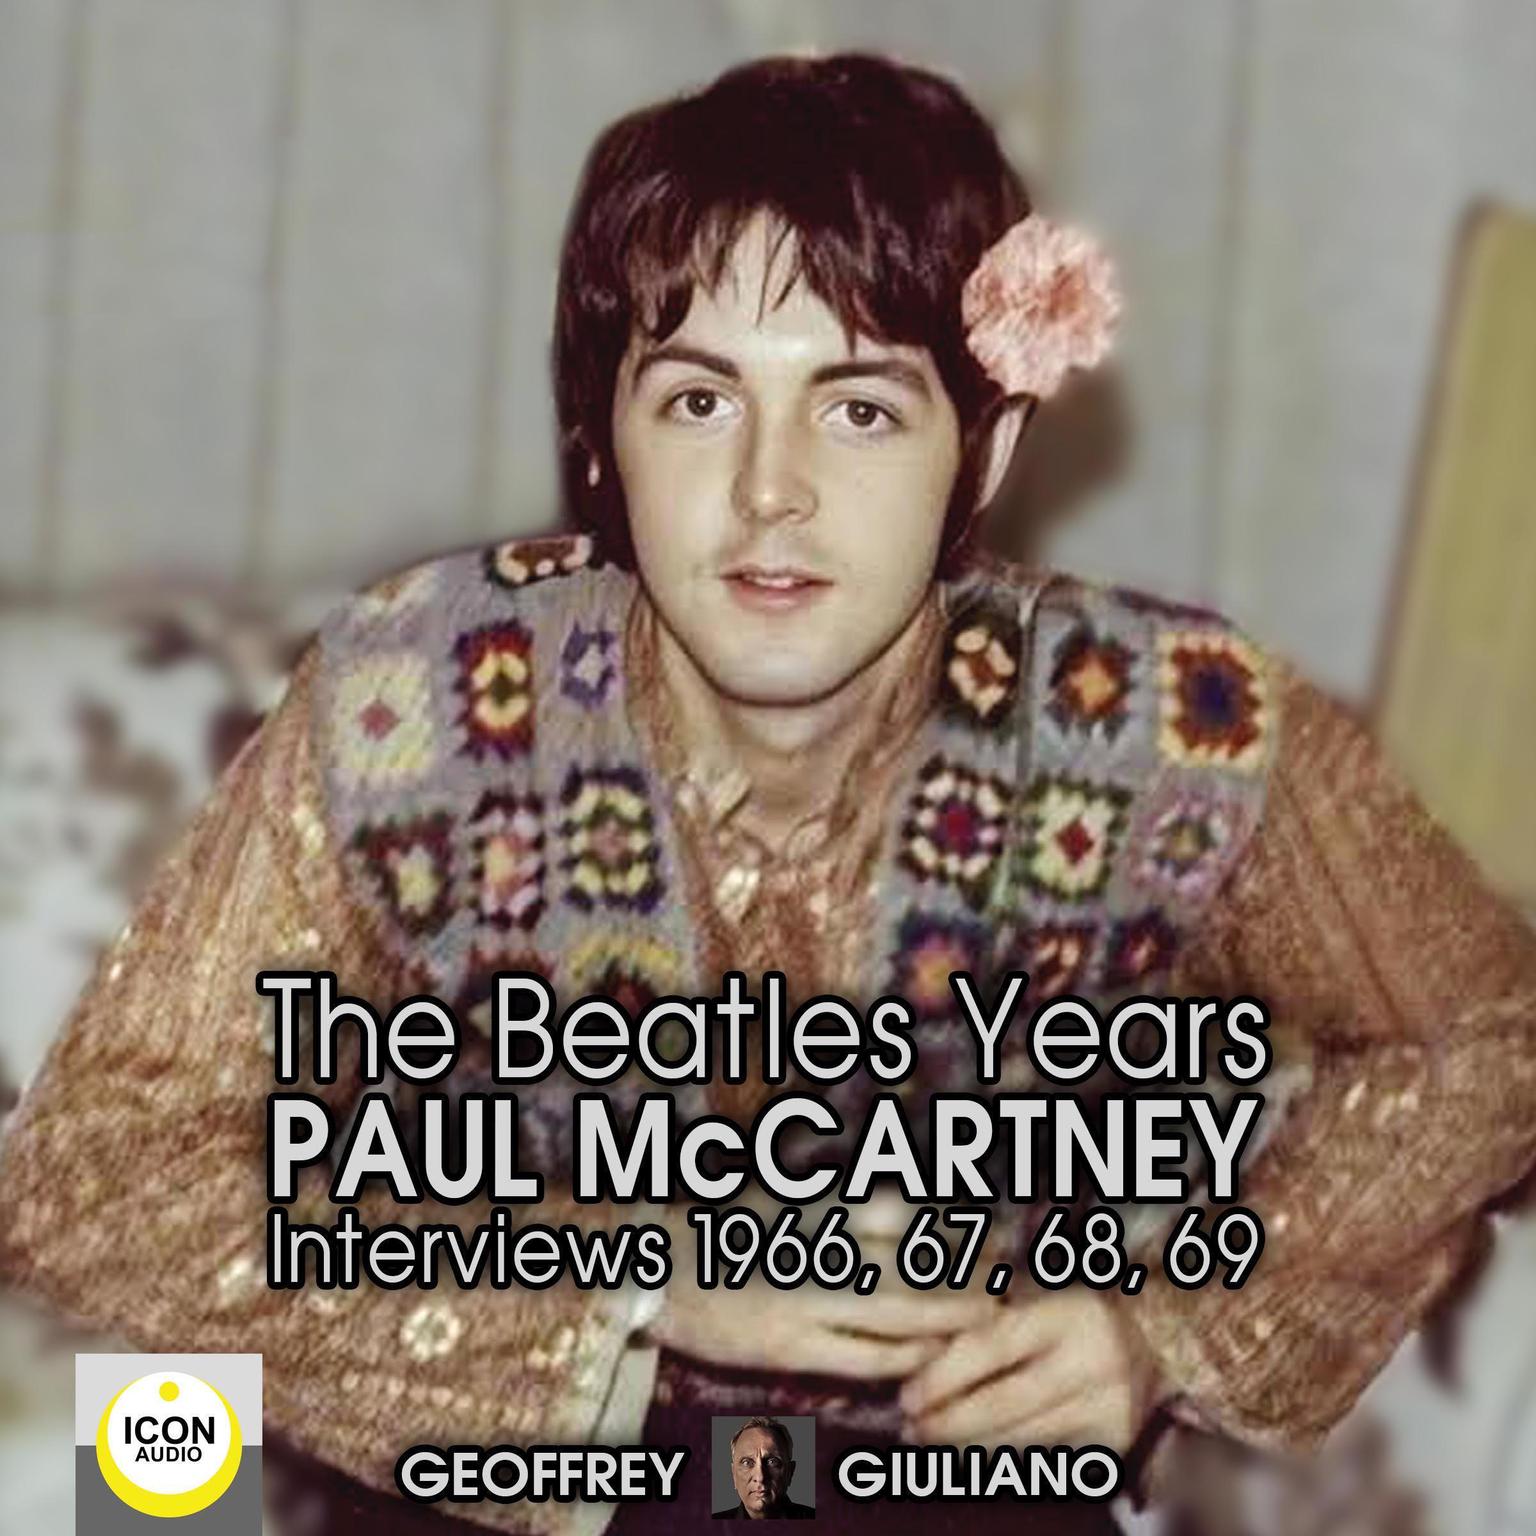 The Beatles Years; Paul McCartney Interviews 1966, 67, 68, 69 Audiobook, by Geoffrey Giuliano